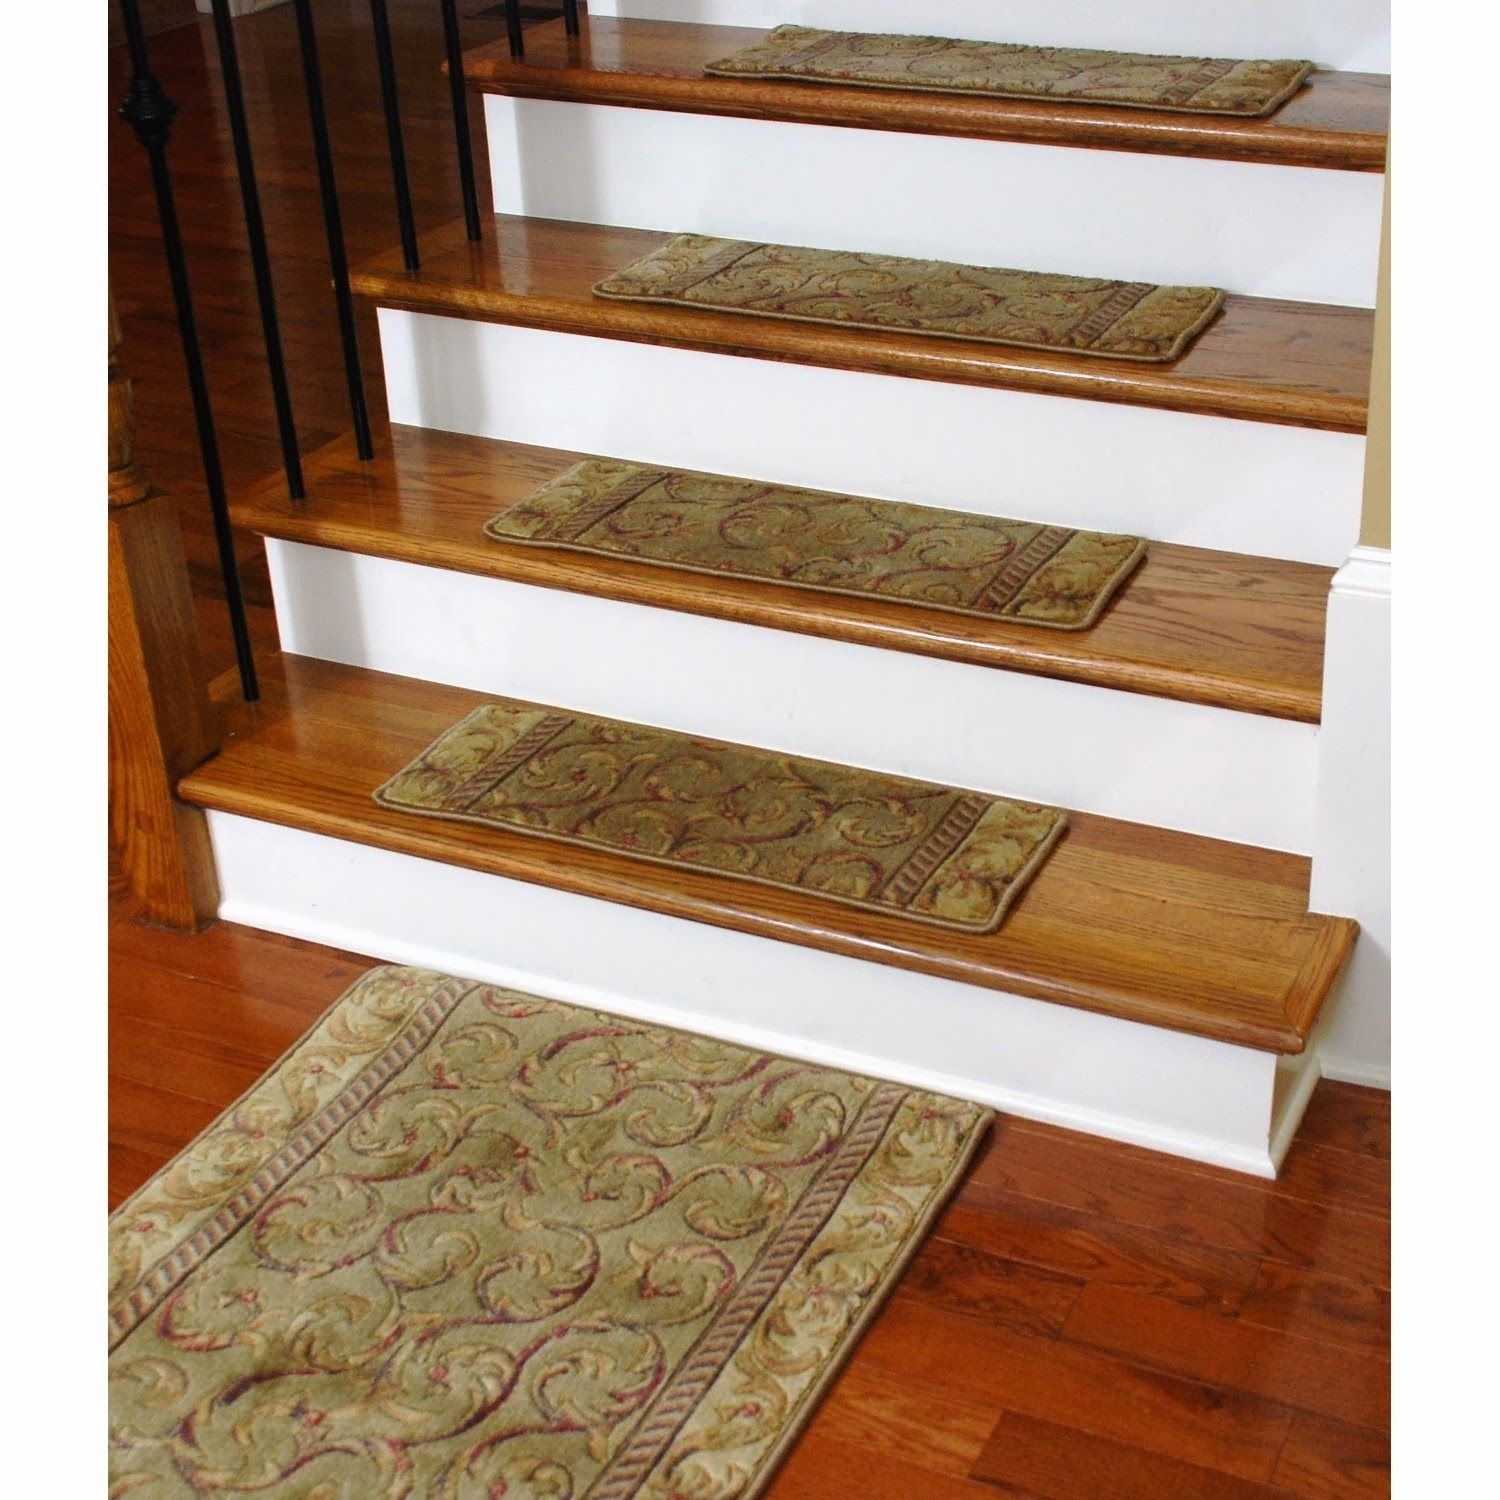 54 Stair Carpet Protectors Home Depot Carpet Protectors Best Home In Carpet Protector Mats For Stairs (View 4 of 20)